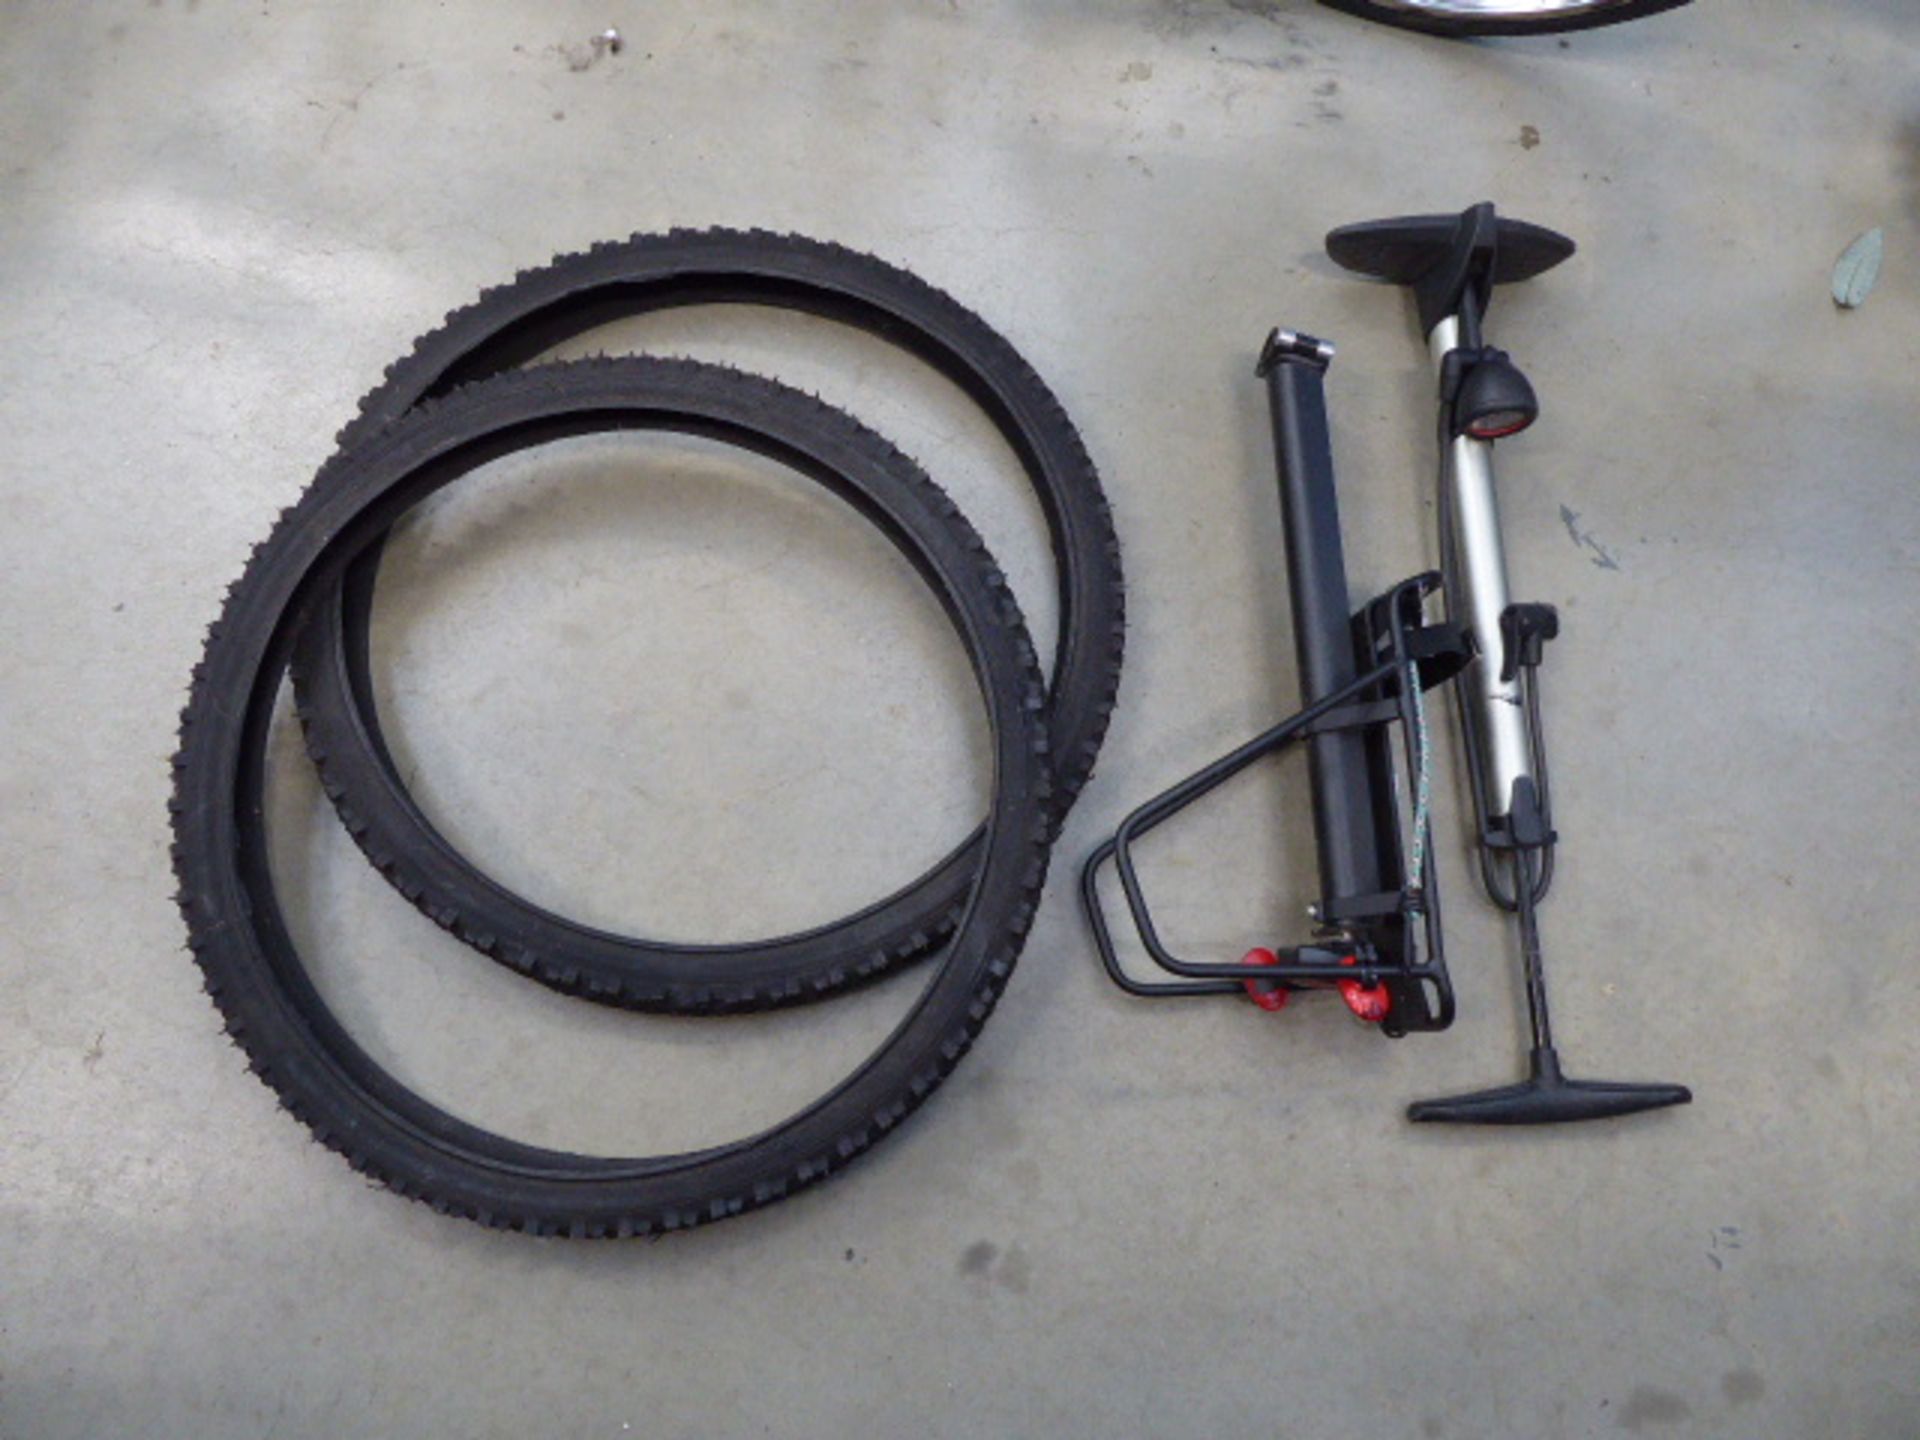 Bike rack, bike pump and 2 tyres